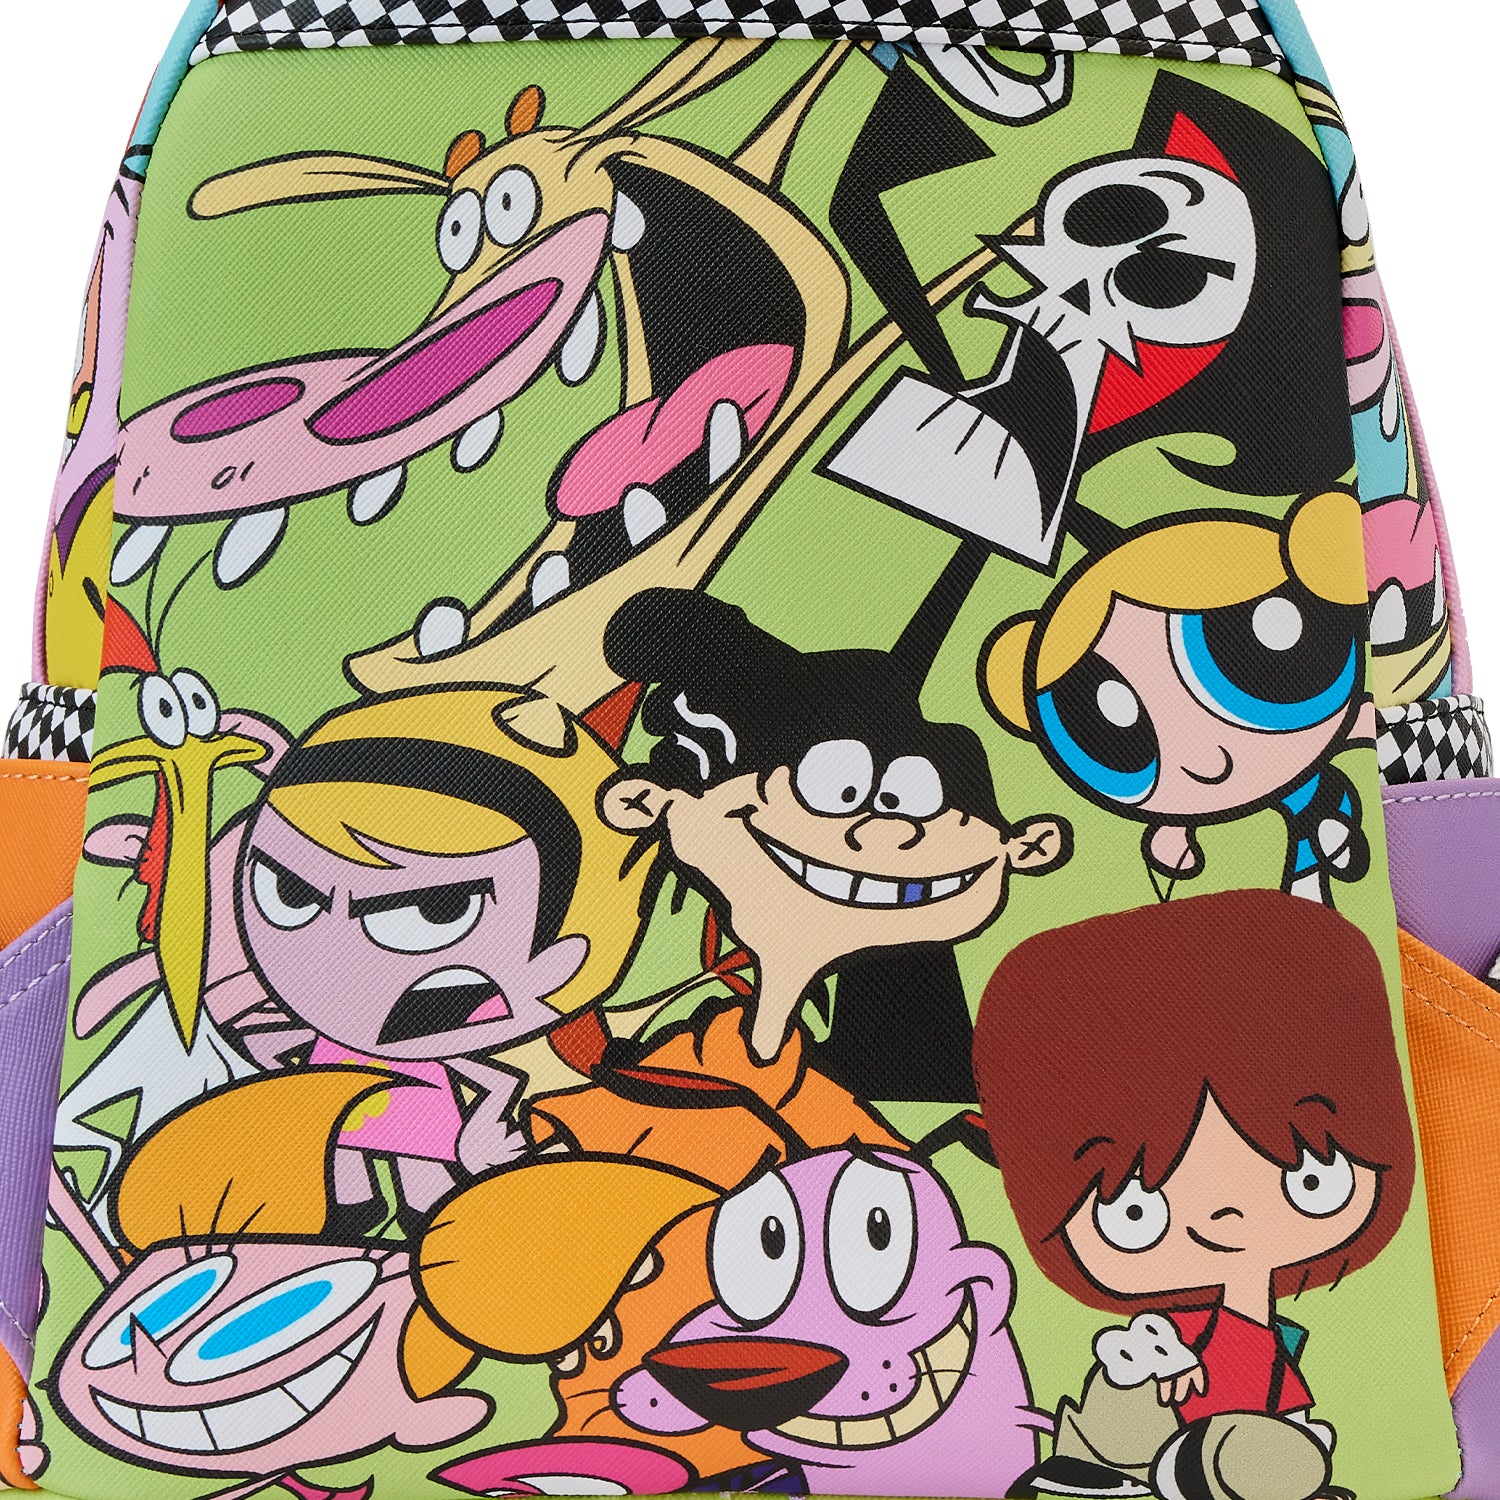 Cartoon Network | Retro Collage Mini Backpack